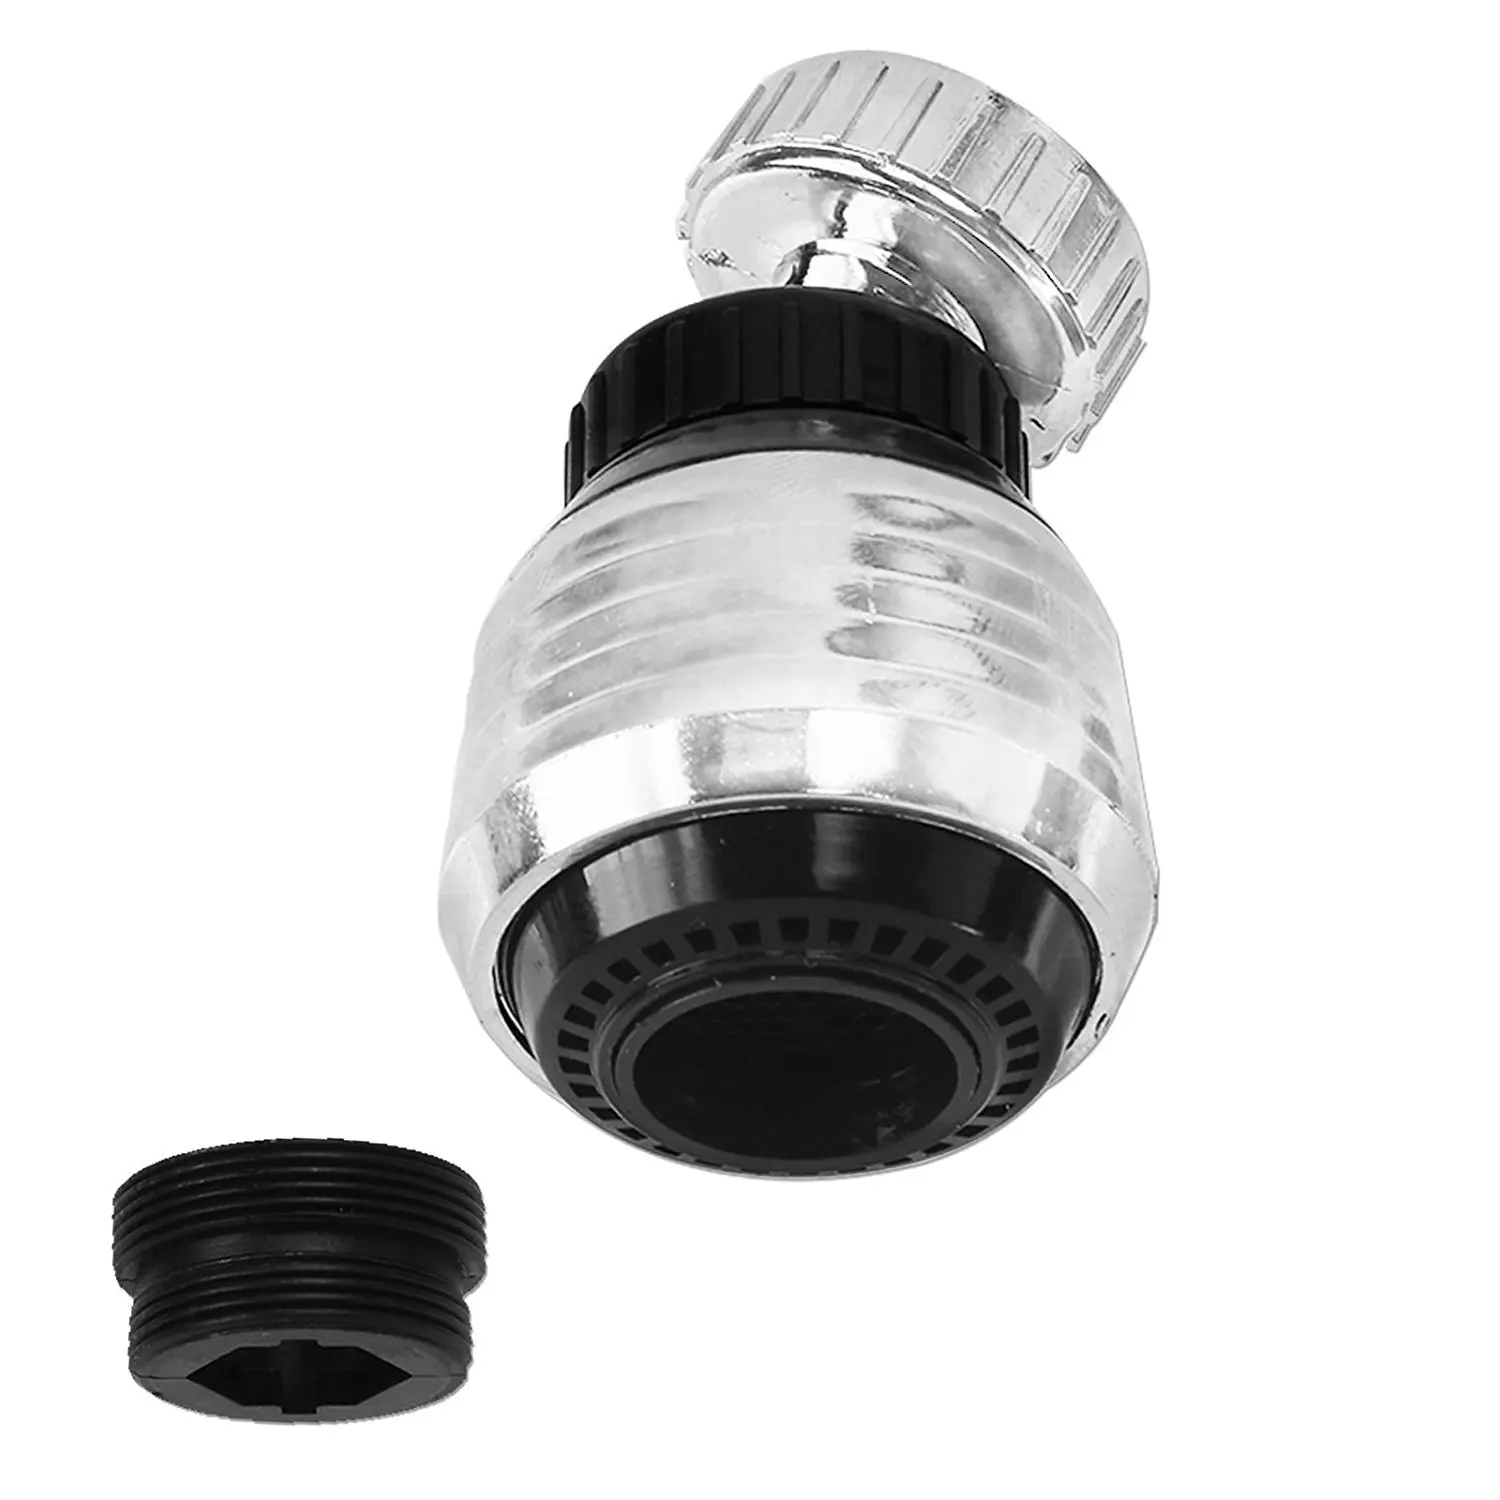 Siroflex faucet swivel sprayer black — pic 15